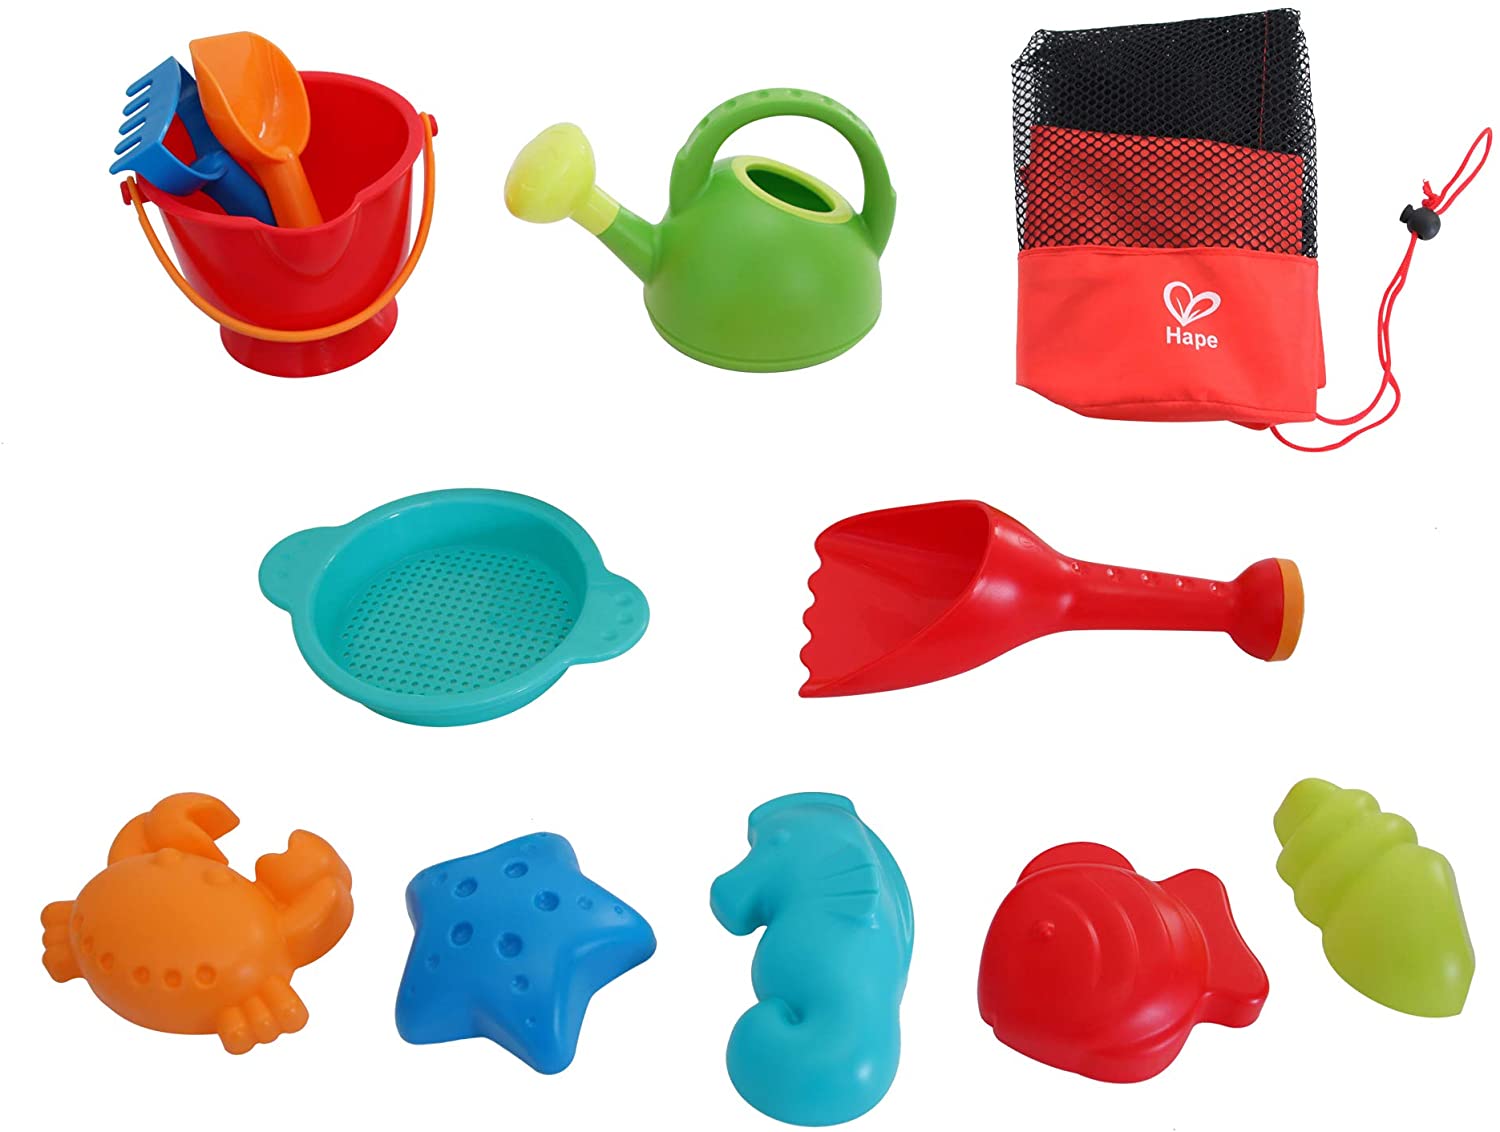 Hape Beach Toy Essential Set, Mesh Bag Included